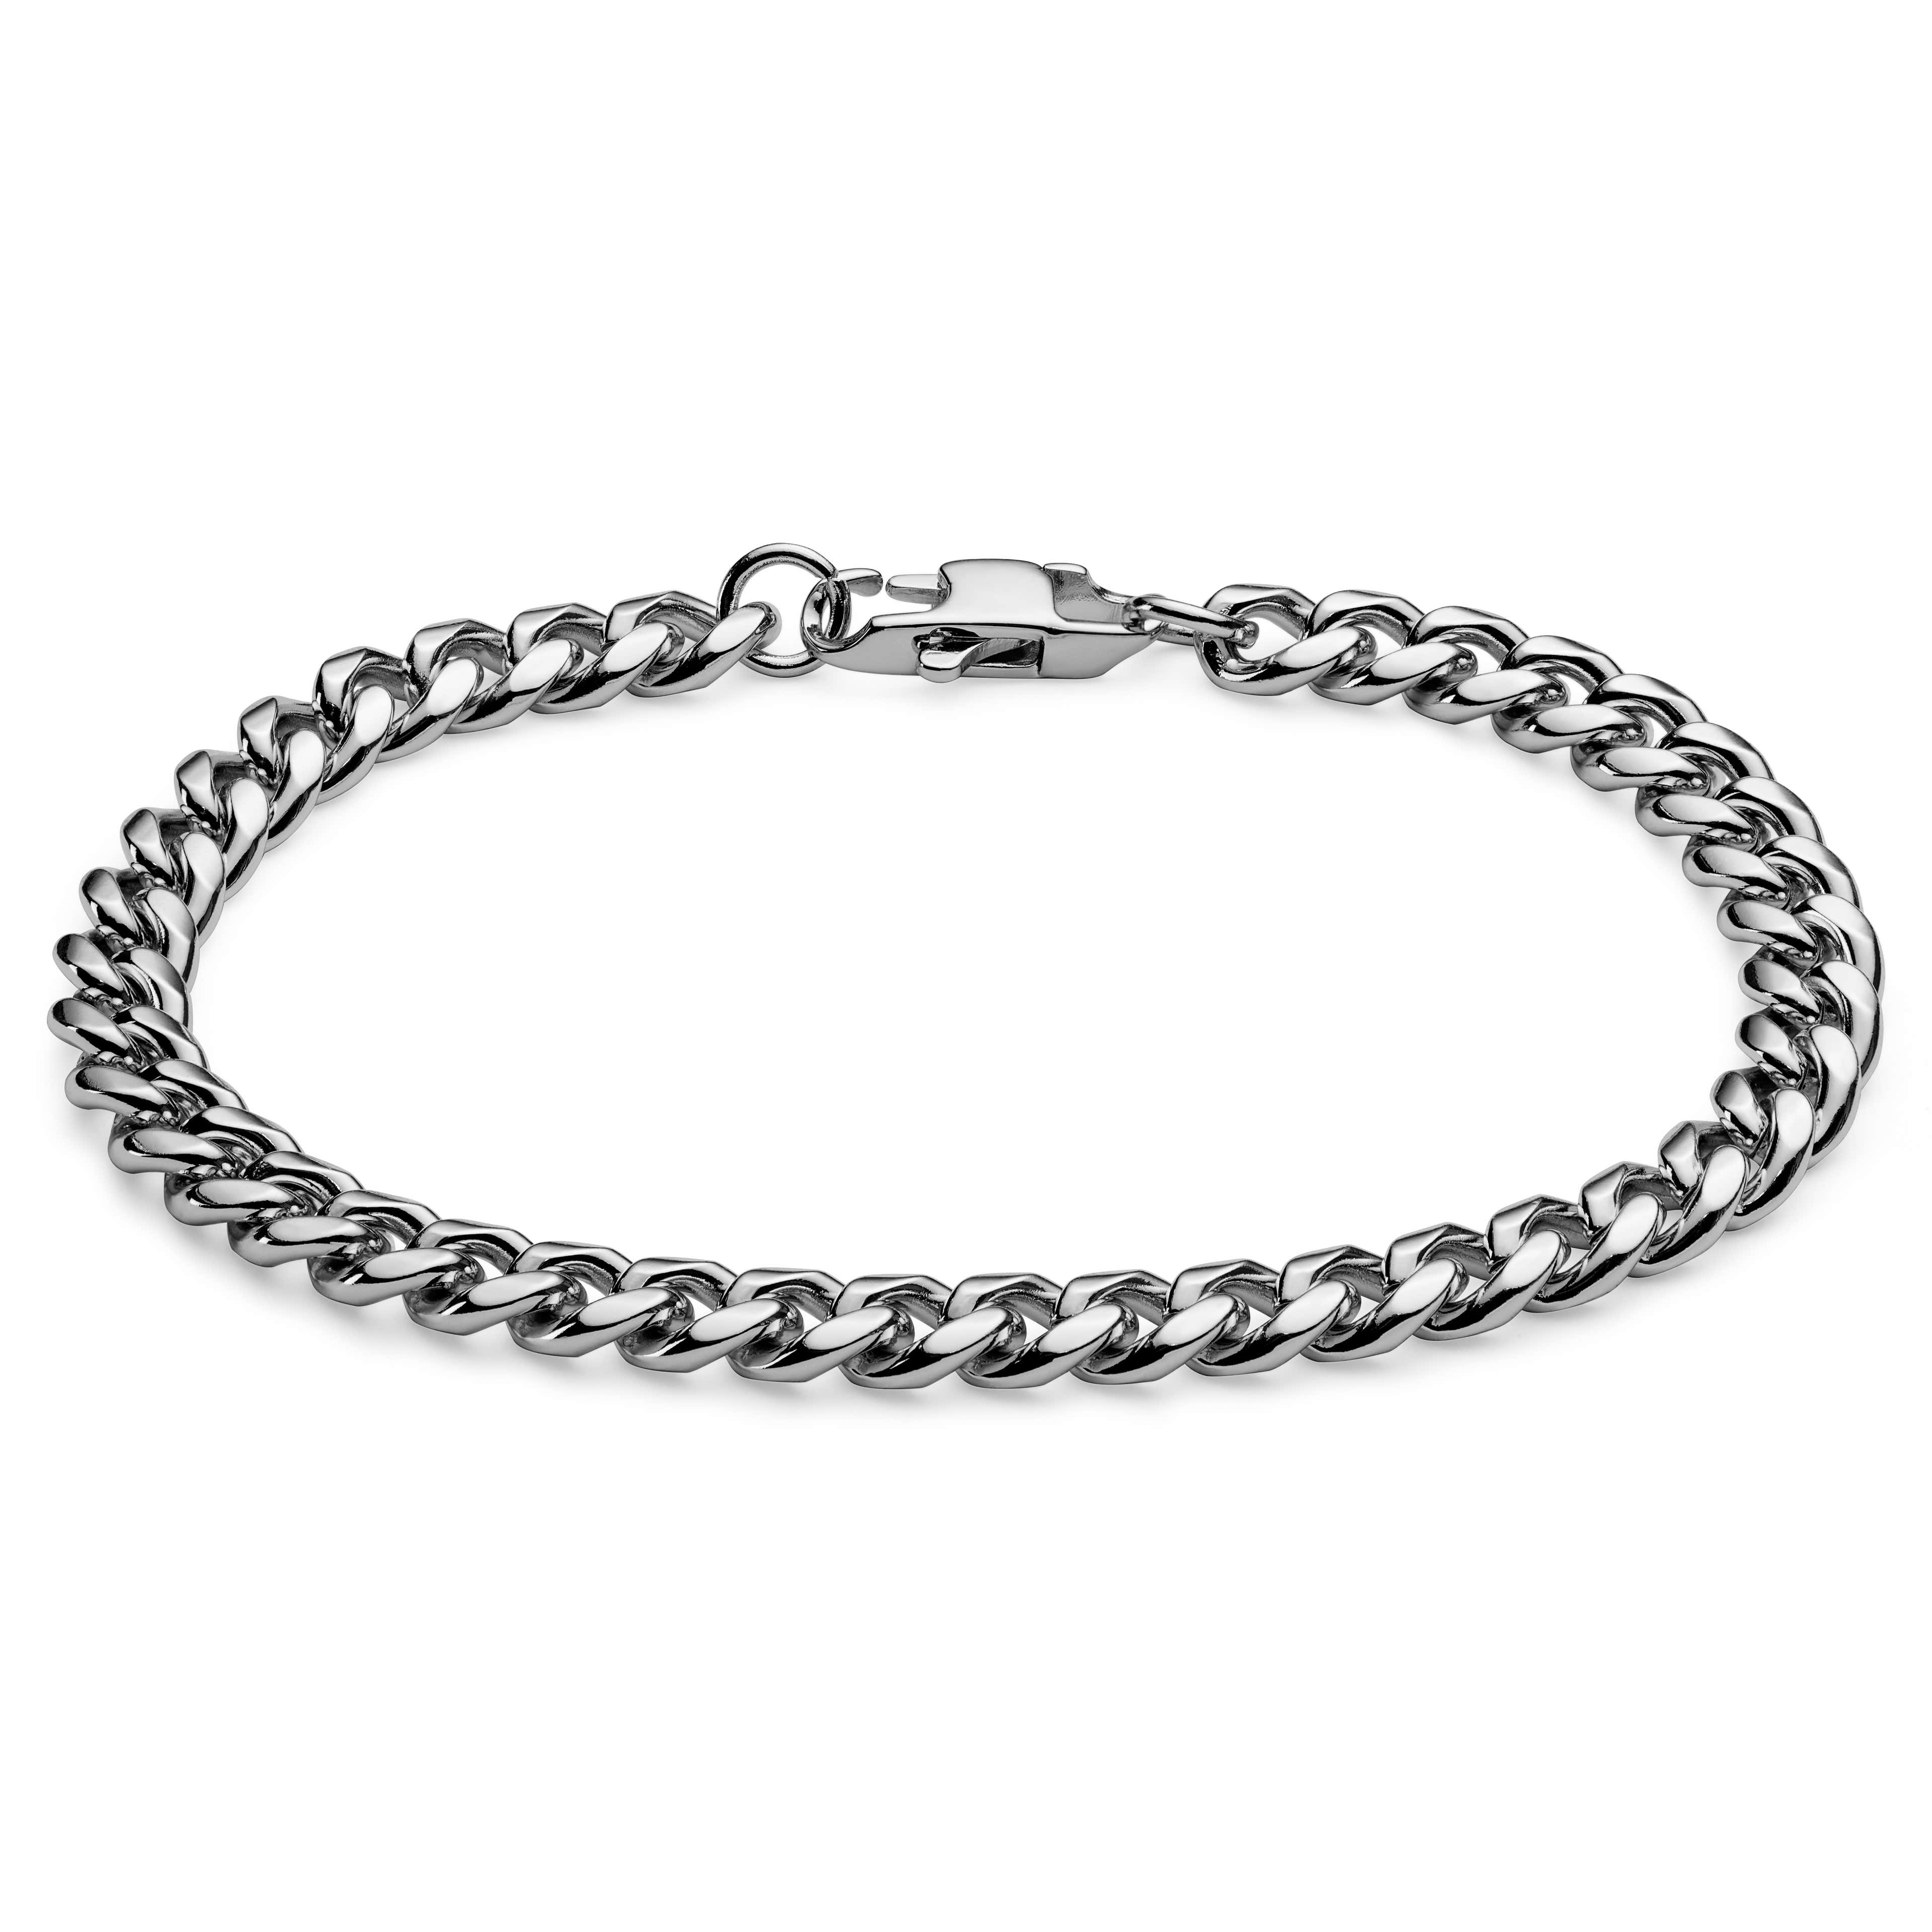 6mm Silver-Tone Chain Bracelet